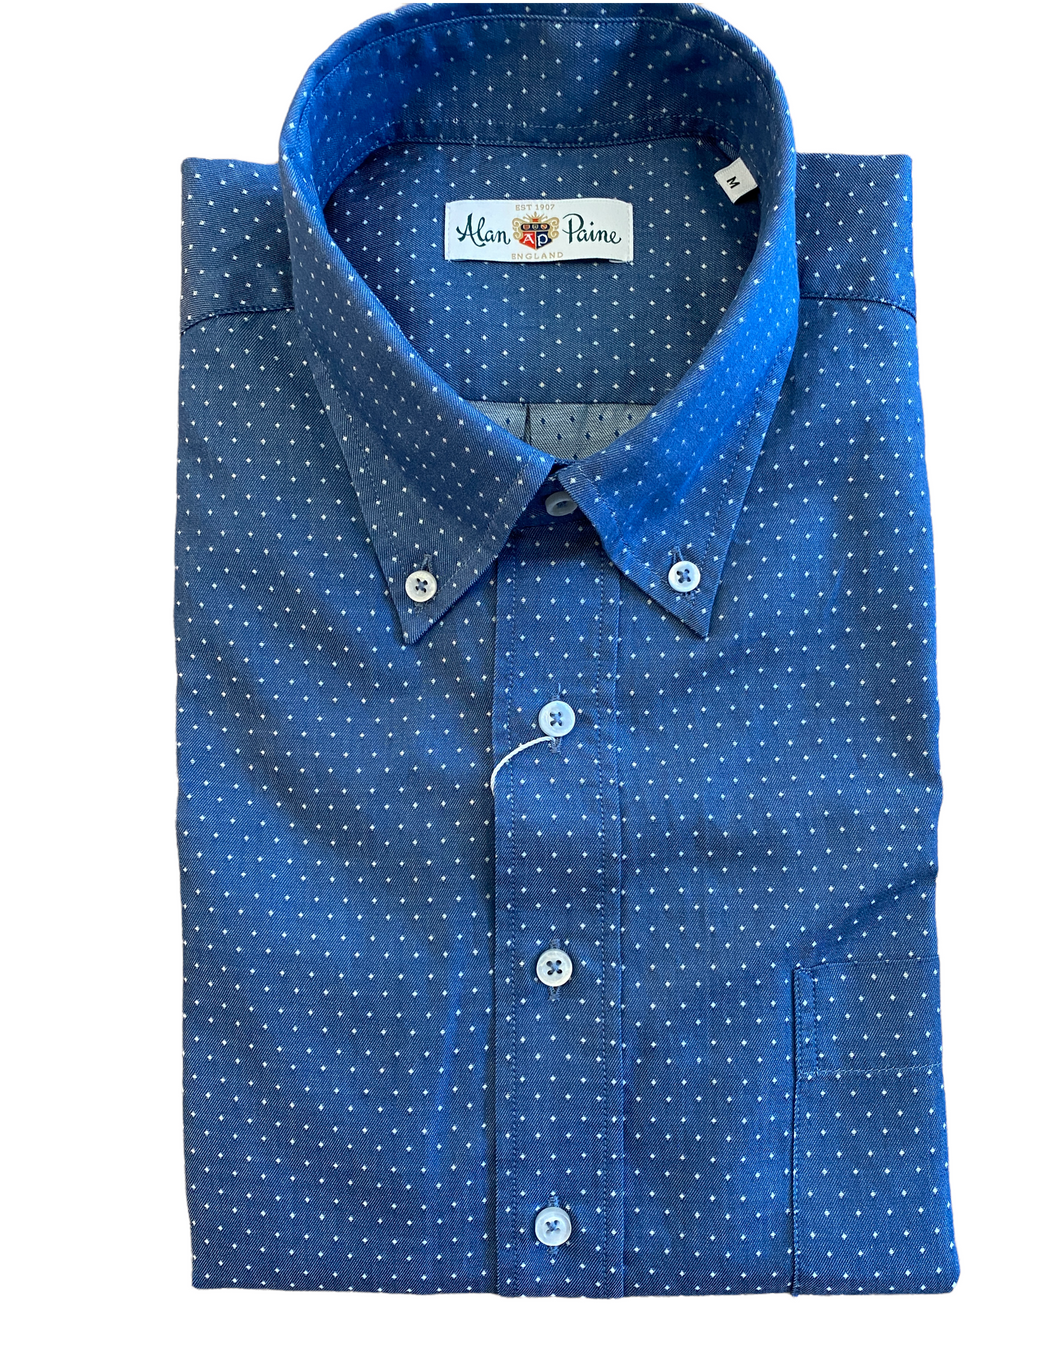 Alan Paine SS Classic BD Cotton Shirt - Blue w/White dots